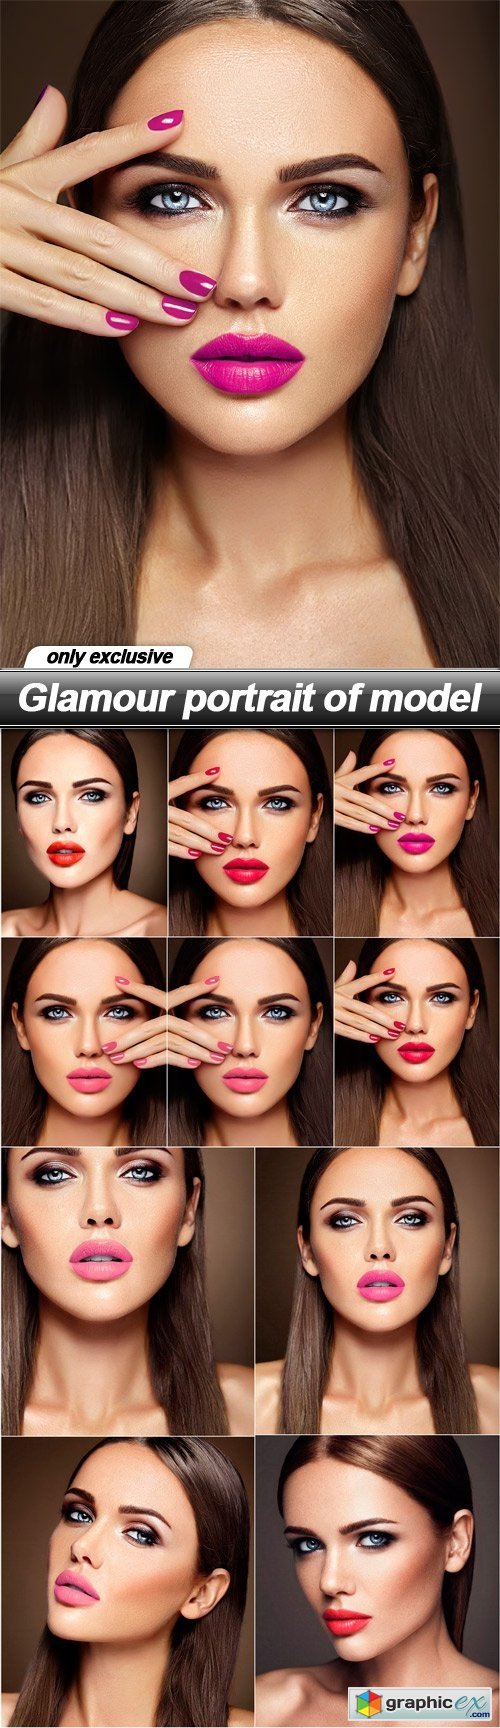 Glamour portrait of model - 10 UHQ JPEG